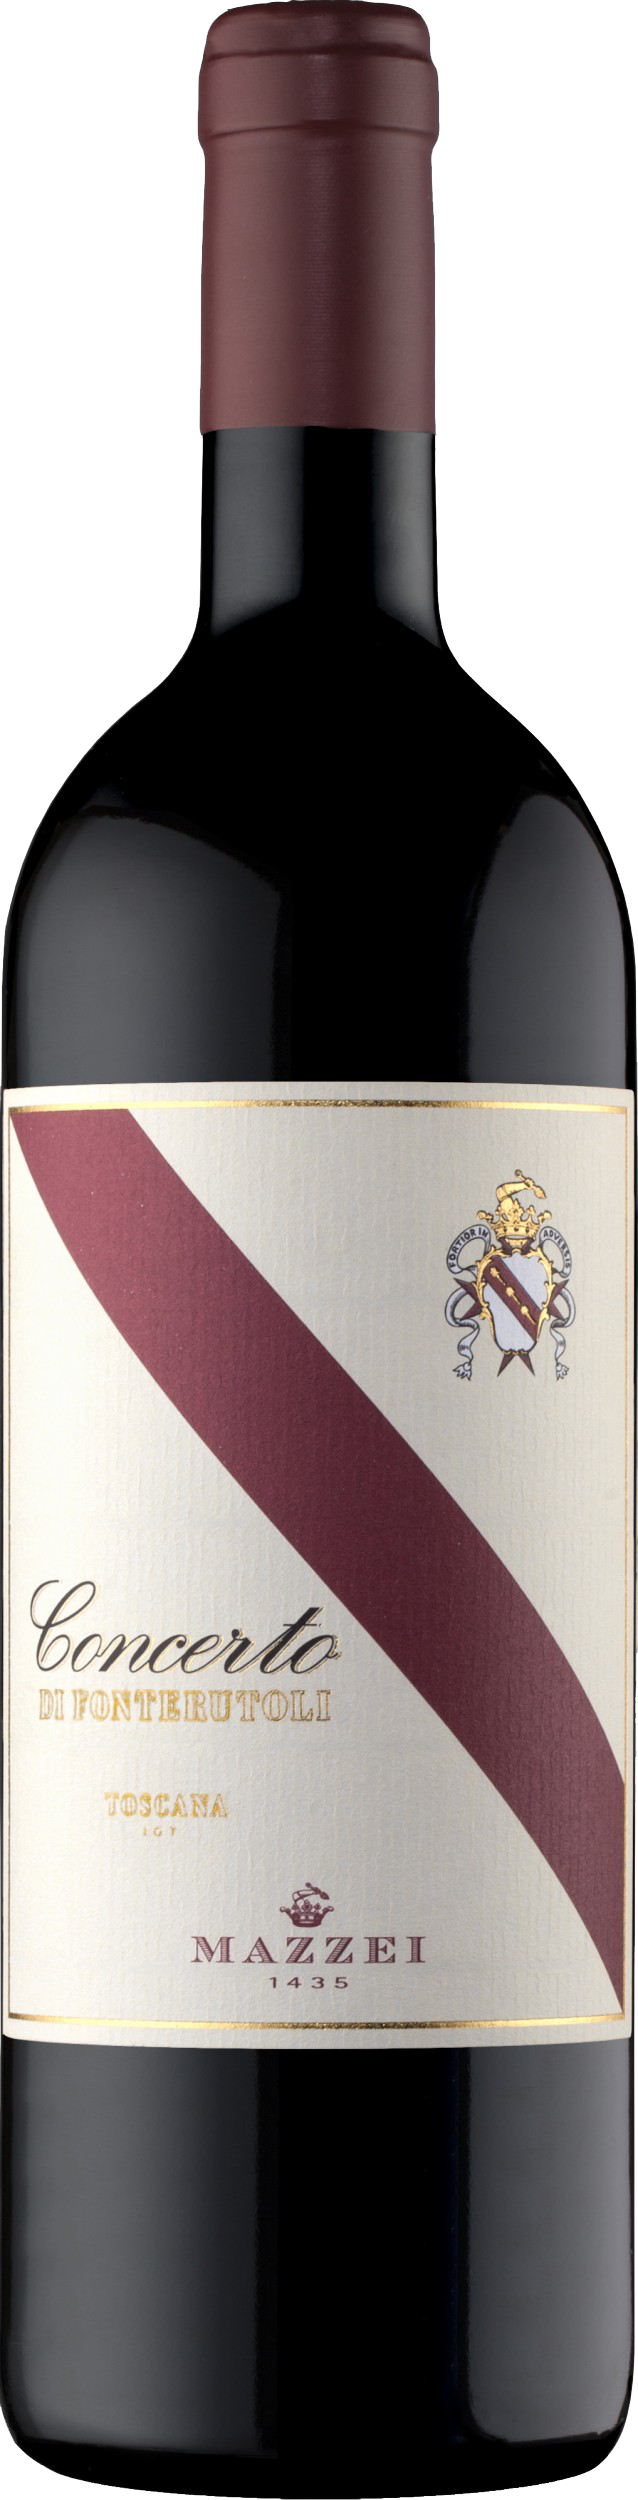 Bottle of Marchesi Mazzei Concerto di Fonterutoli Toscana IGT red wine